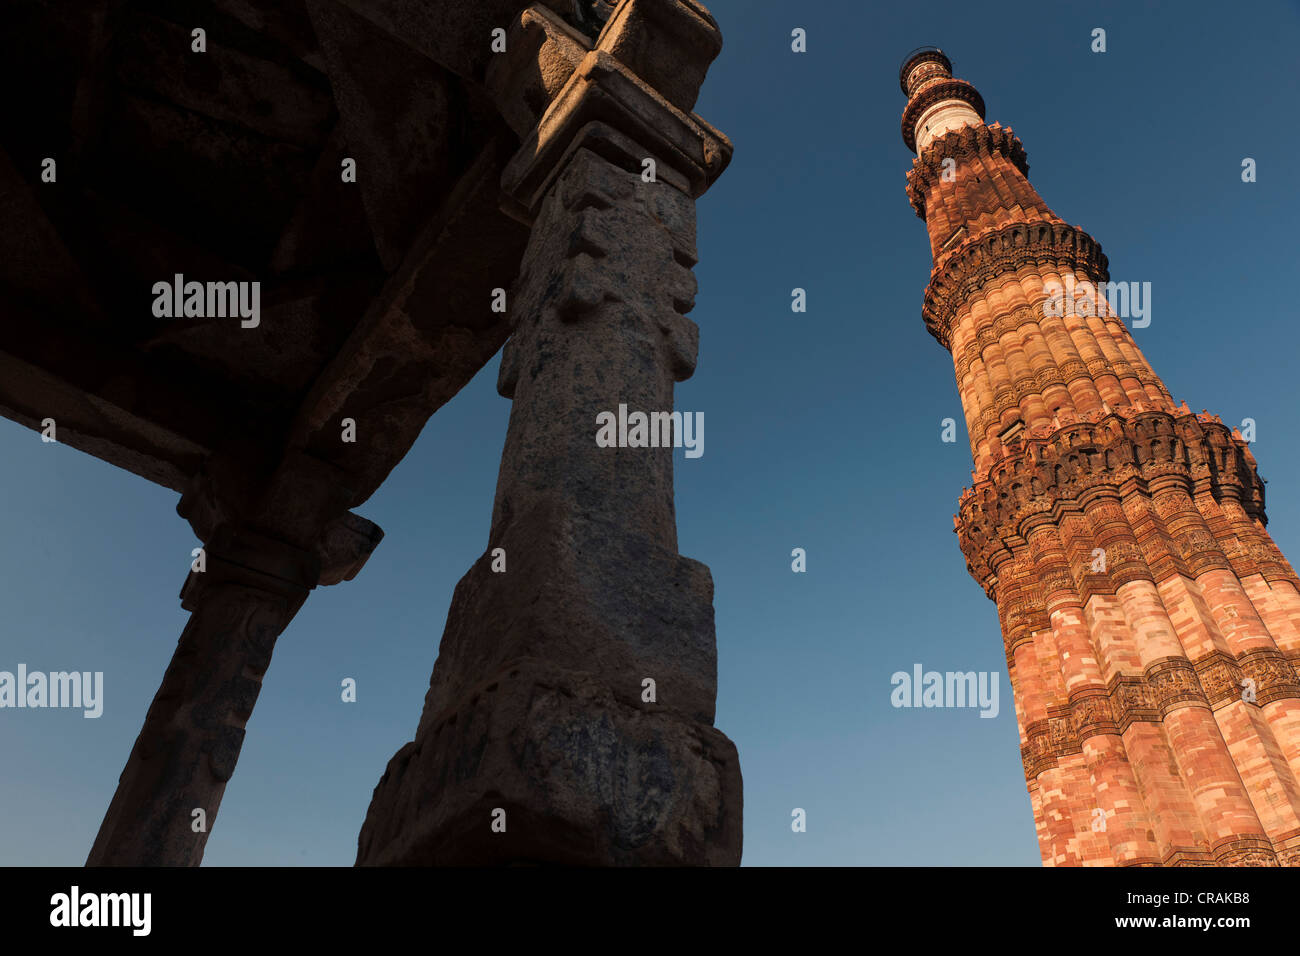 Qutb Minar minaret, UNESCO World Heritage Site, New Delhi, Inde du Nord, Inde, Asie Banque D'Images